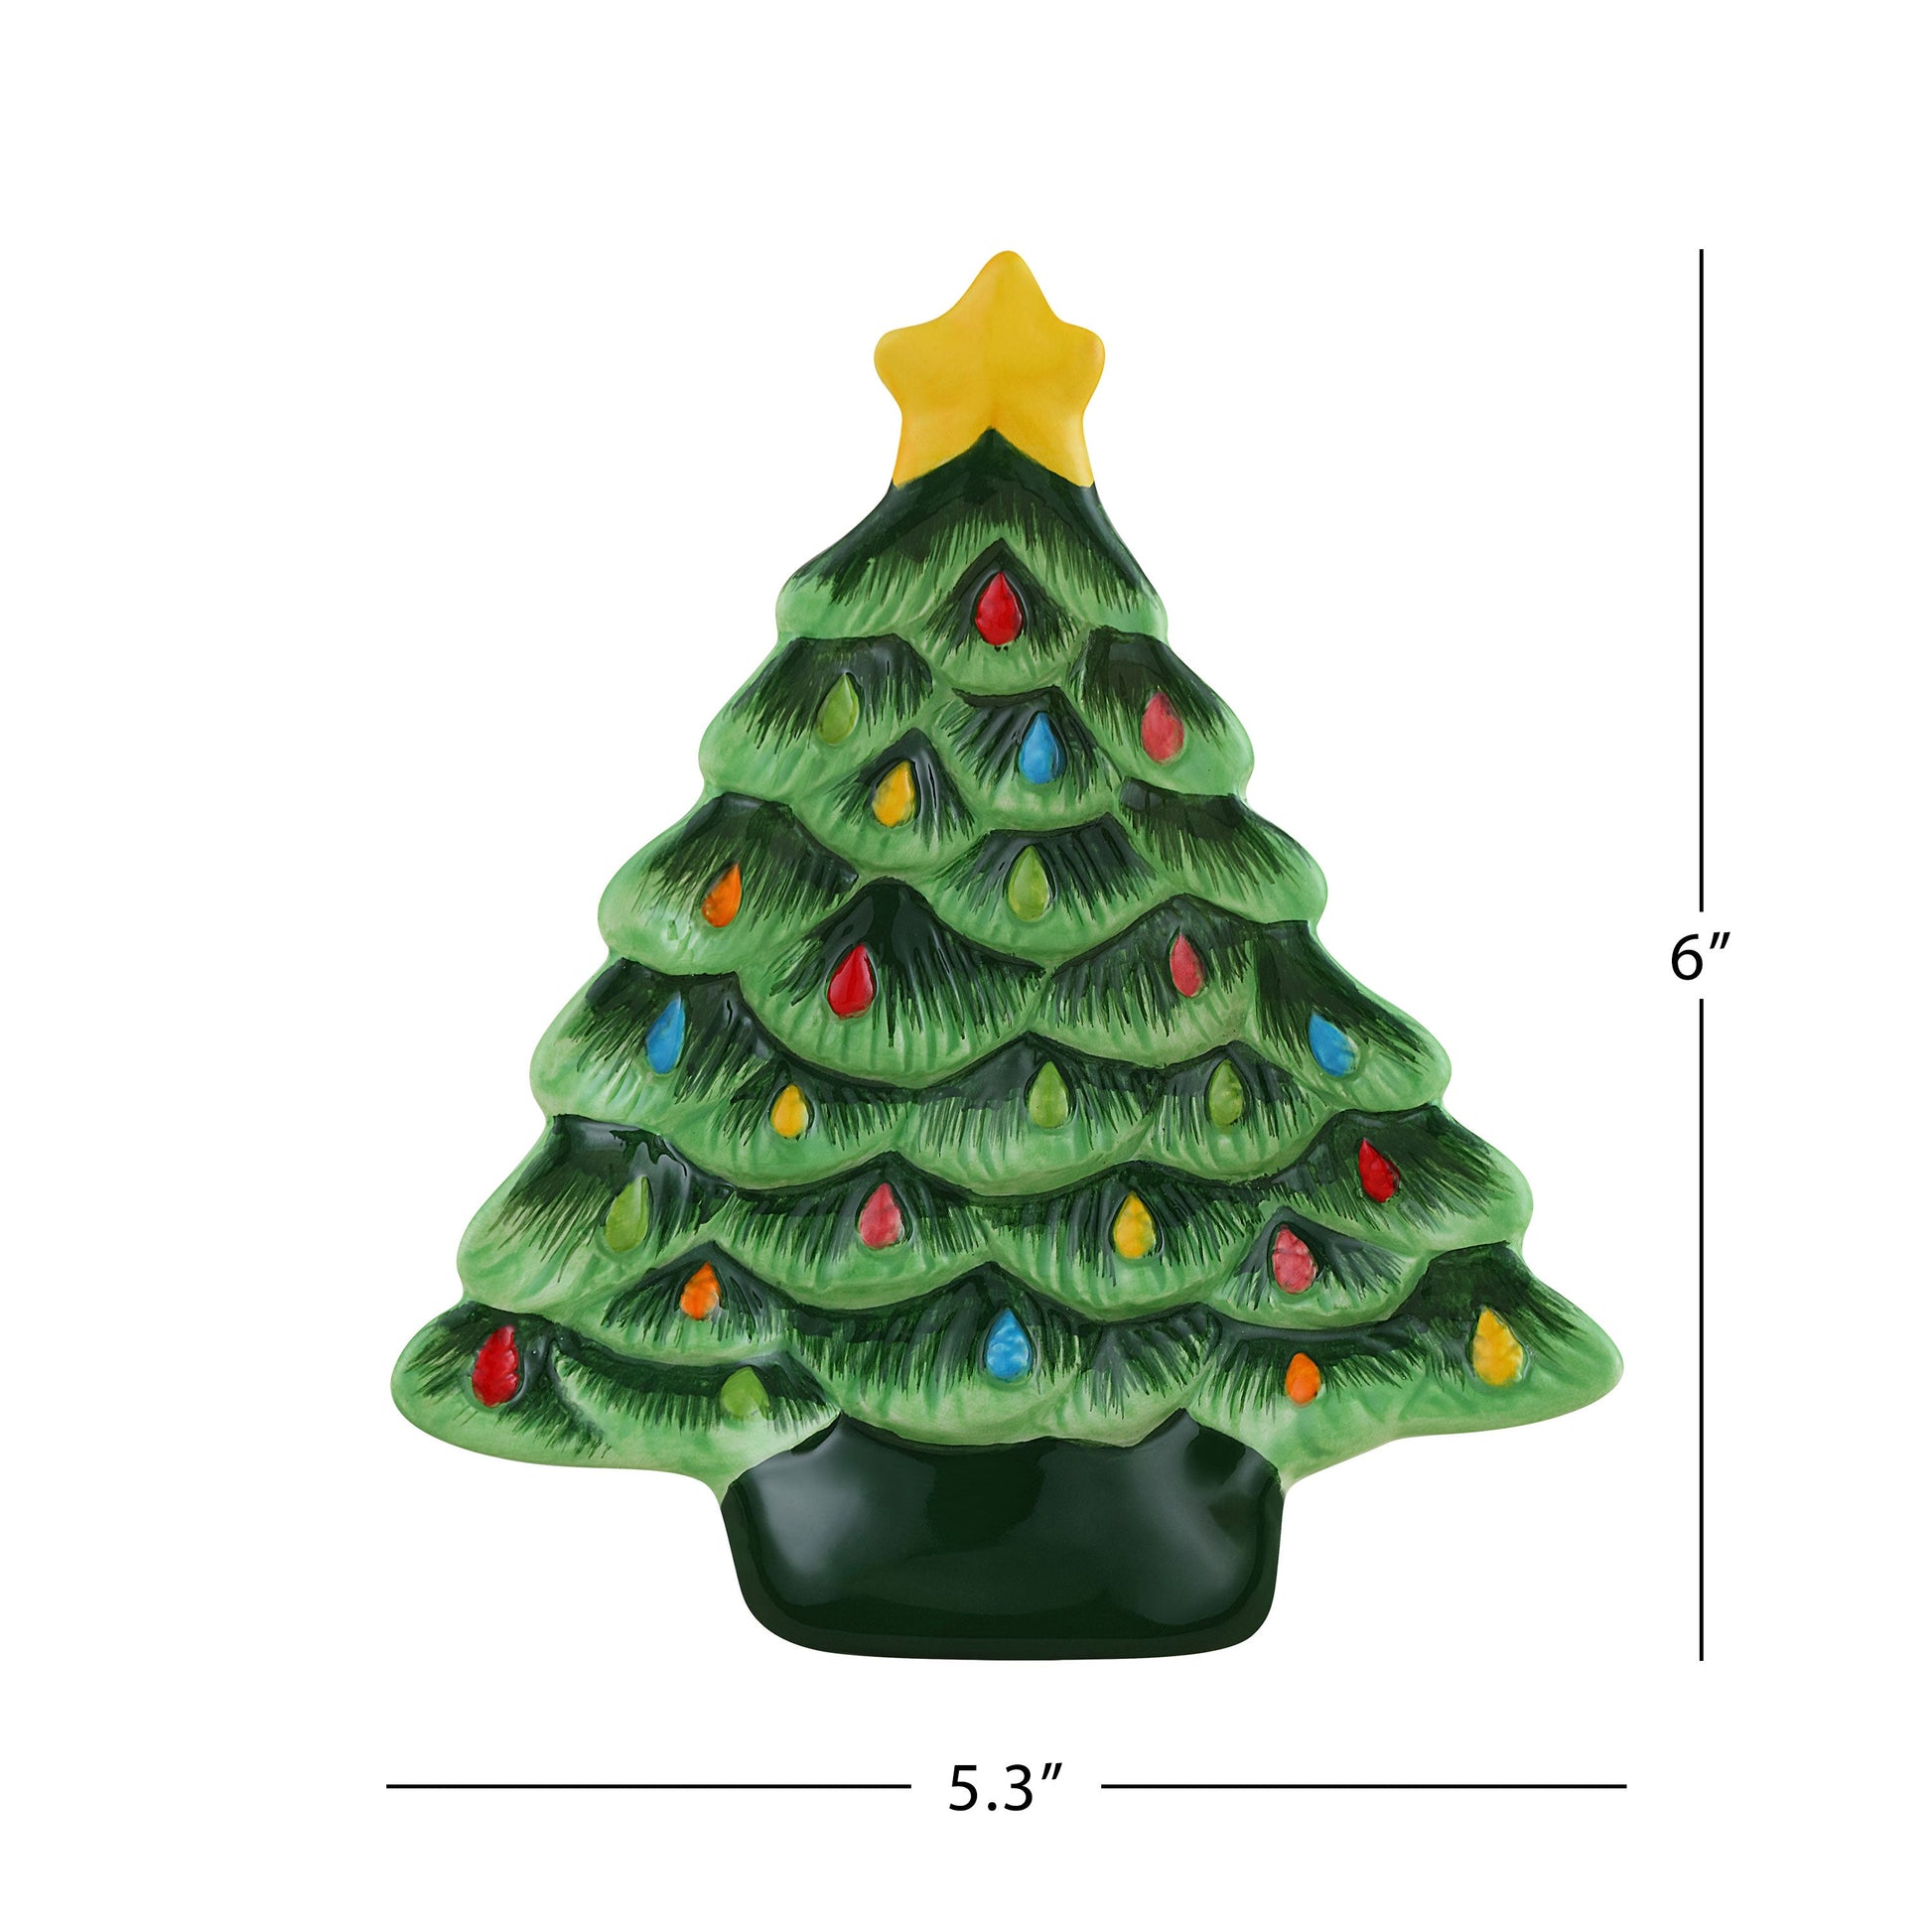 6" Ceramic Trinket Tray Set - Ornament and Tree - Mr. Christmas